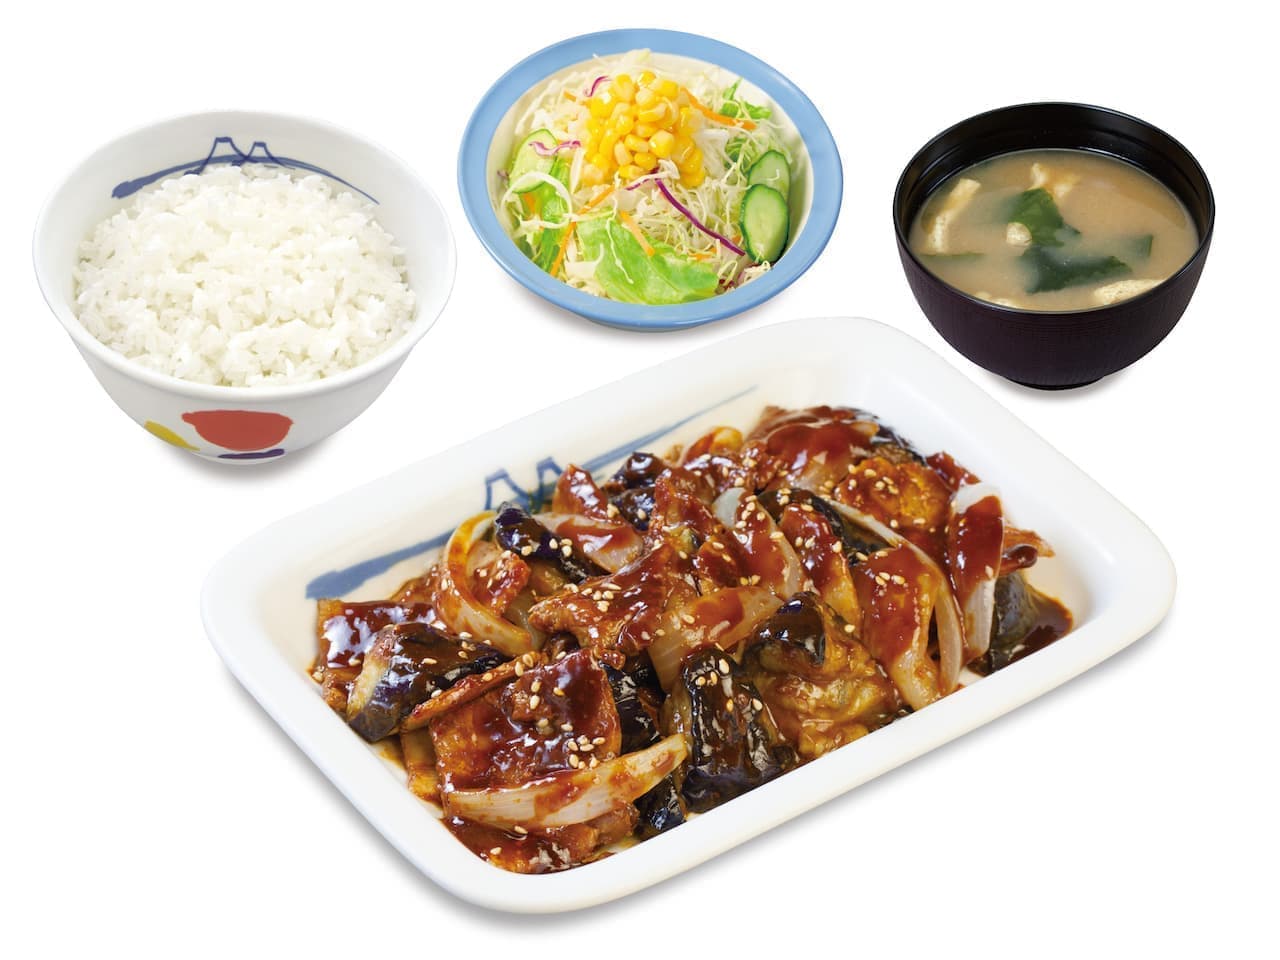 Matsuya - Stir-fried pork and eggplant with spicy miso